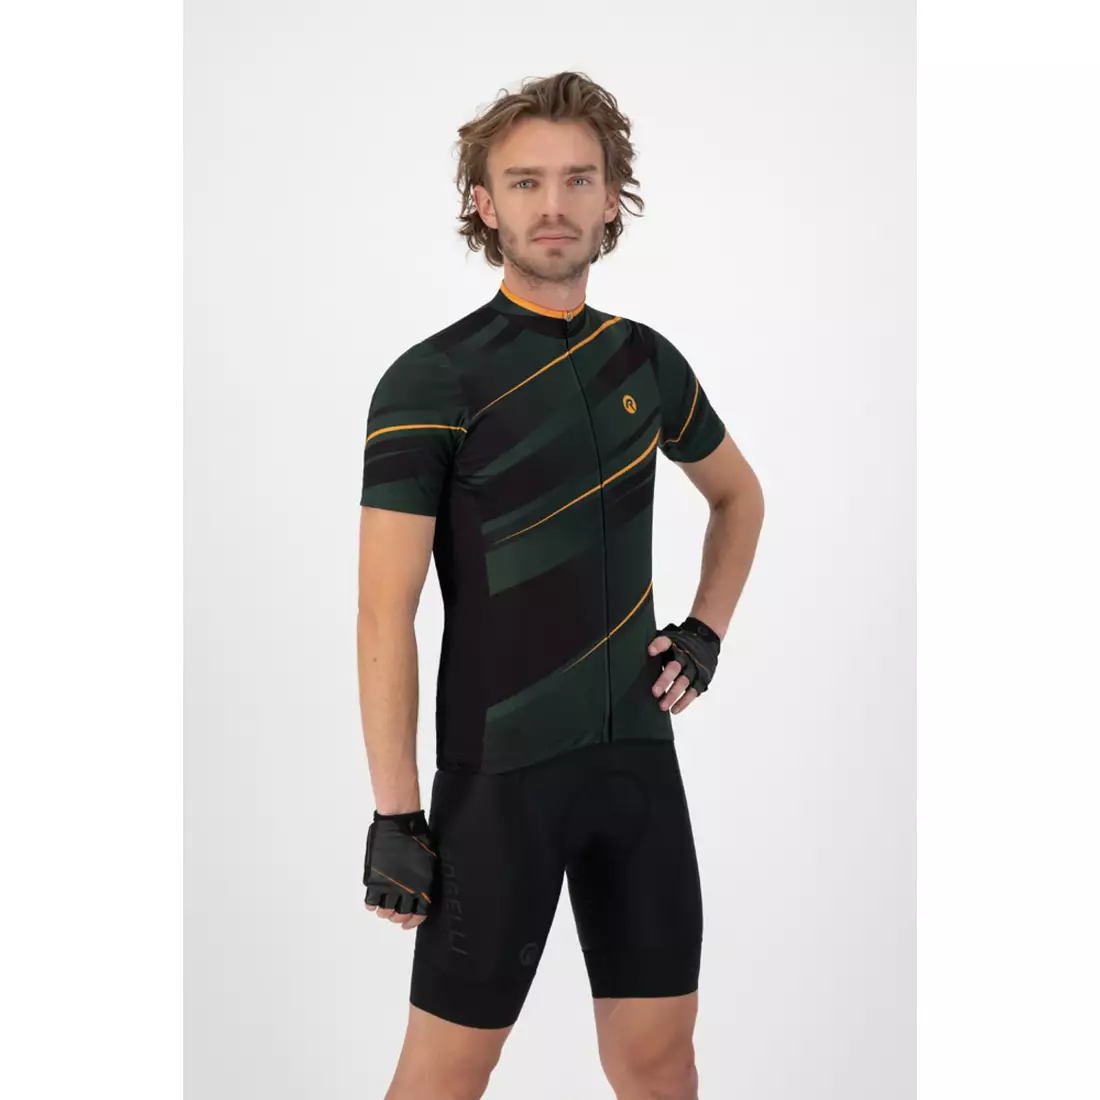 ROGELLI BUZZ Men's cycling jersey, dark green